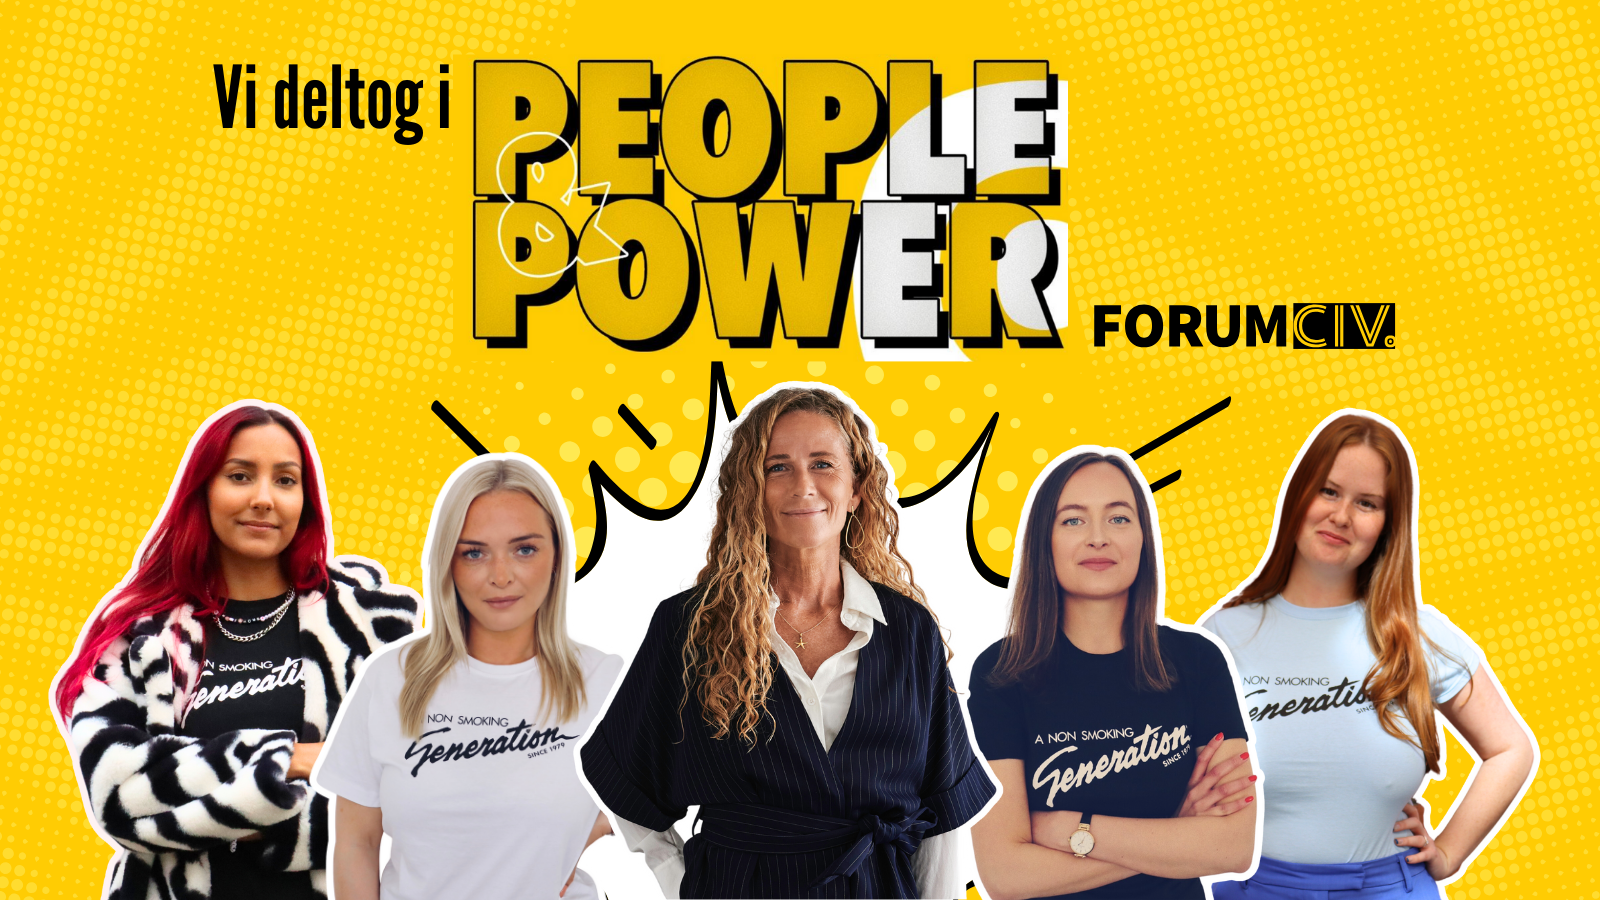 Vårt deltagande i ForumCivs ”People and Power”